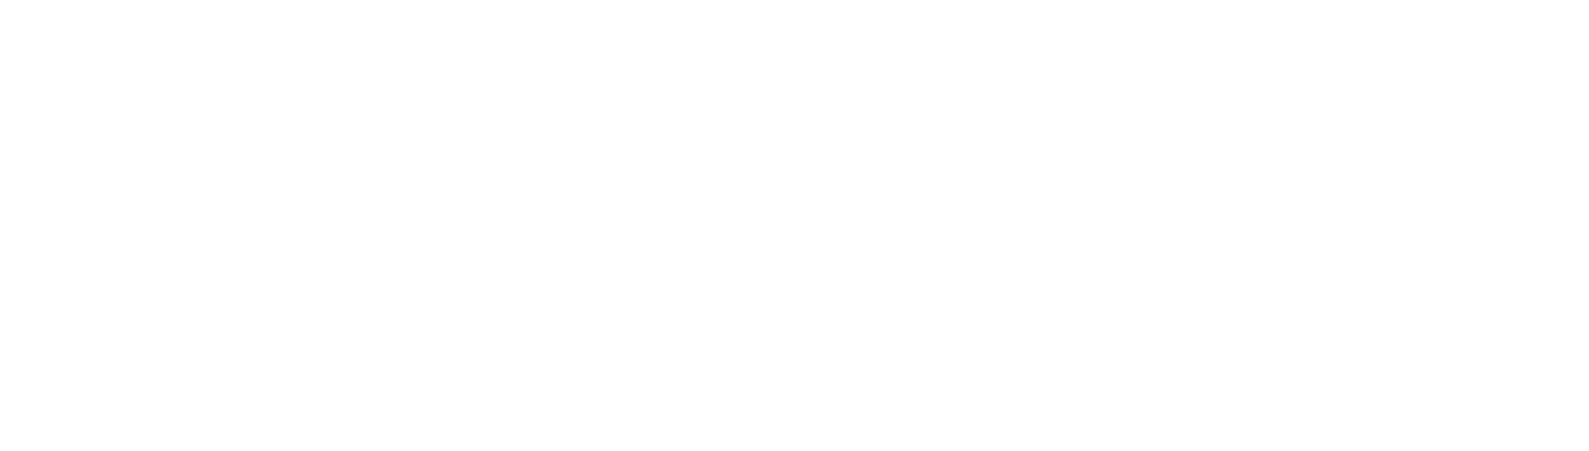 Healthcare Realty logo grand pour les fonds sombres (PNG transparent)